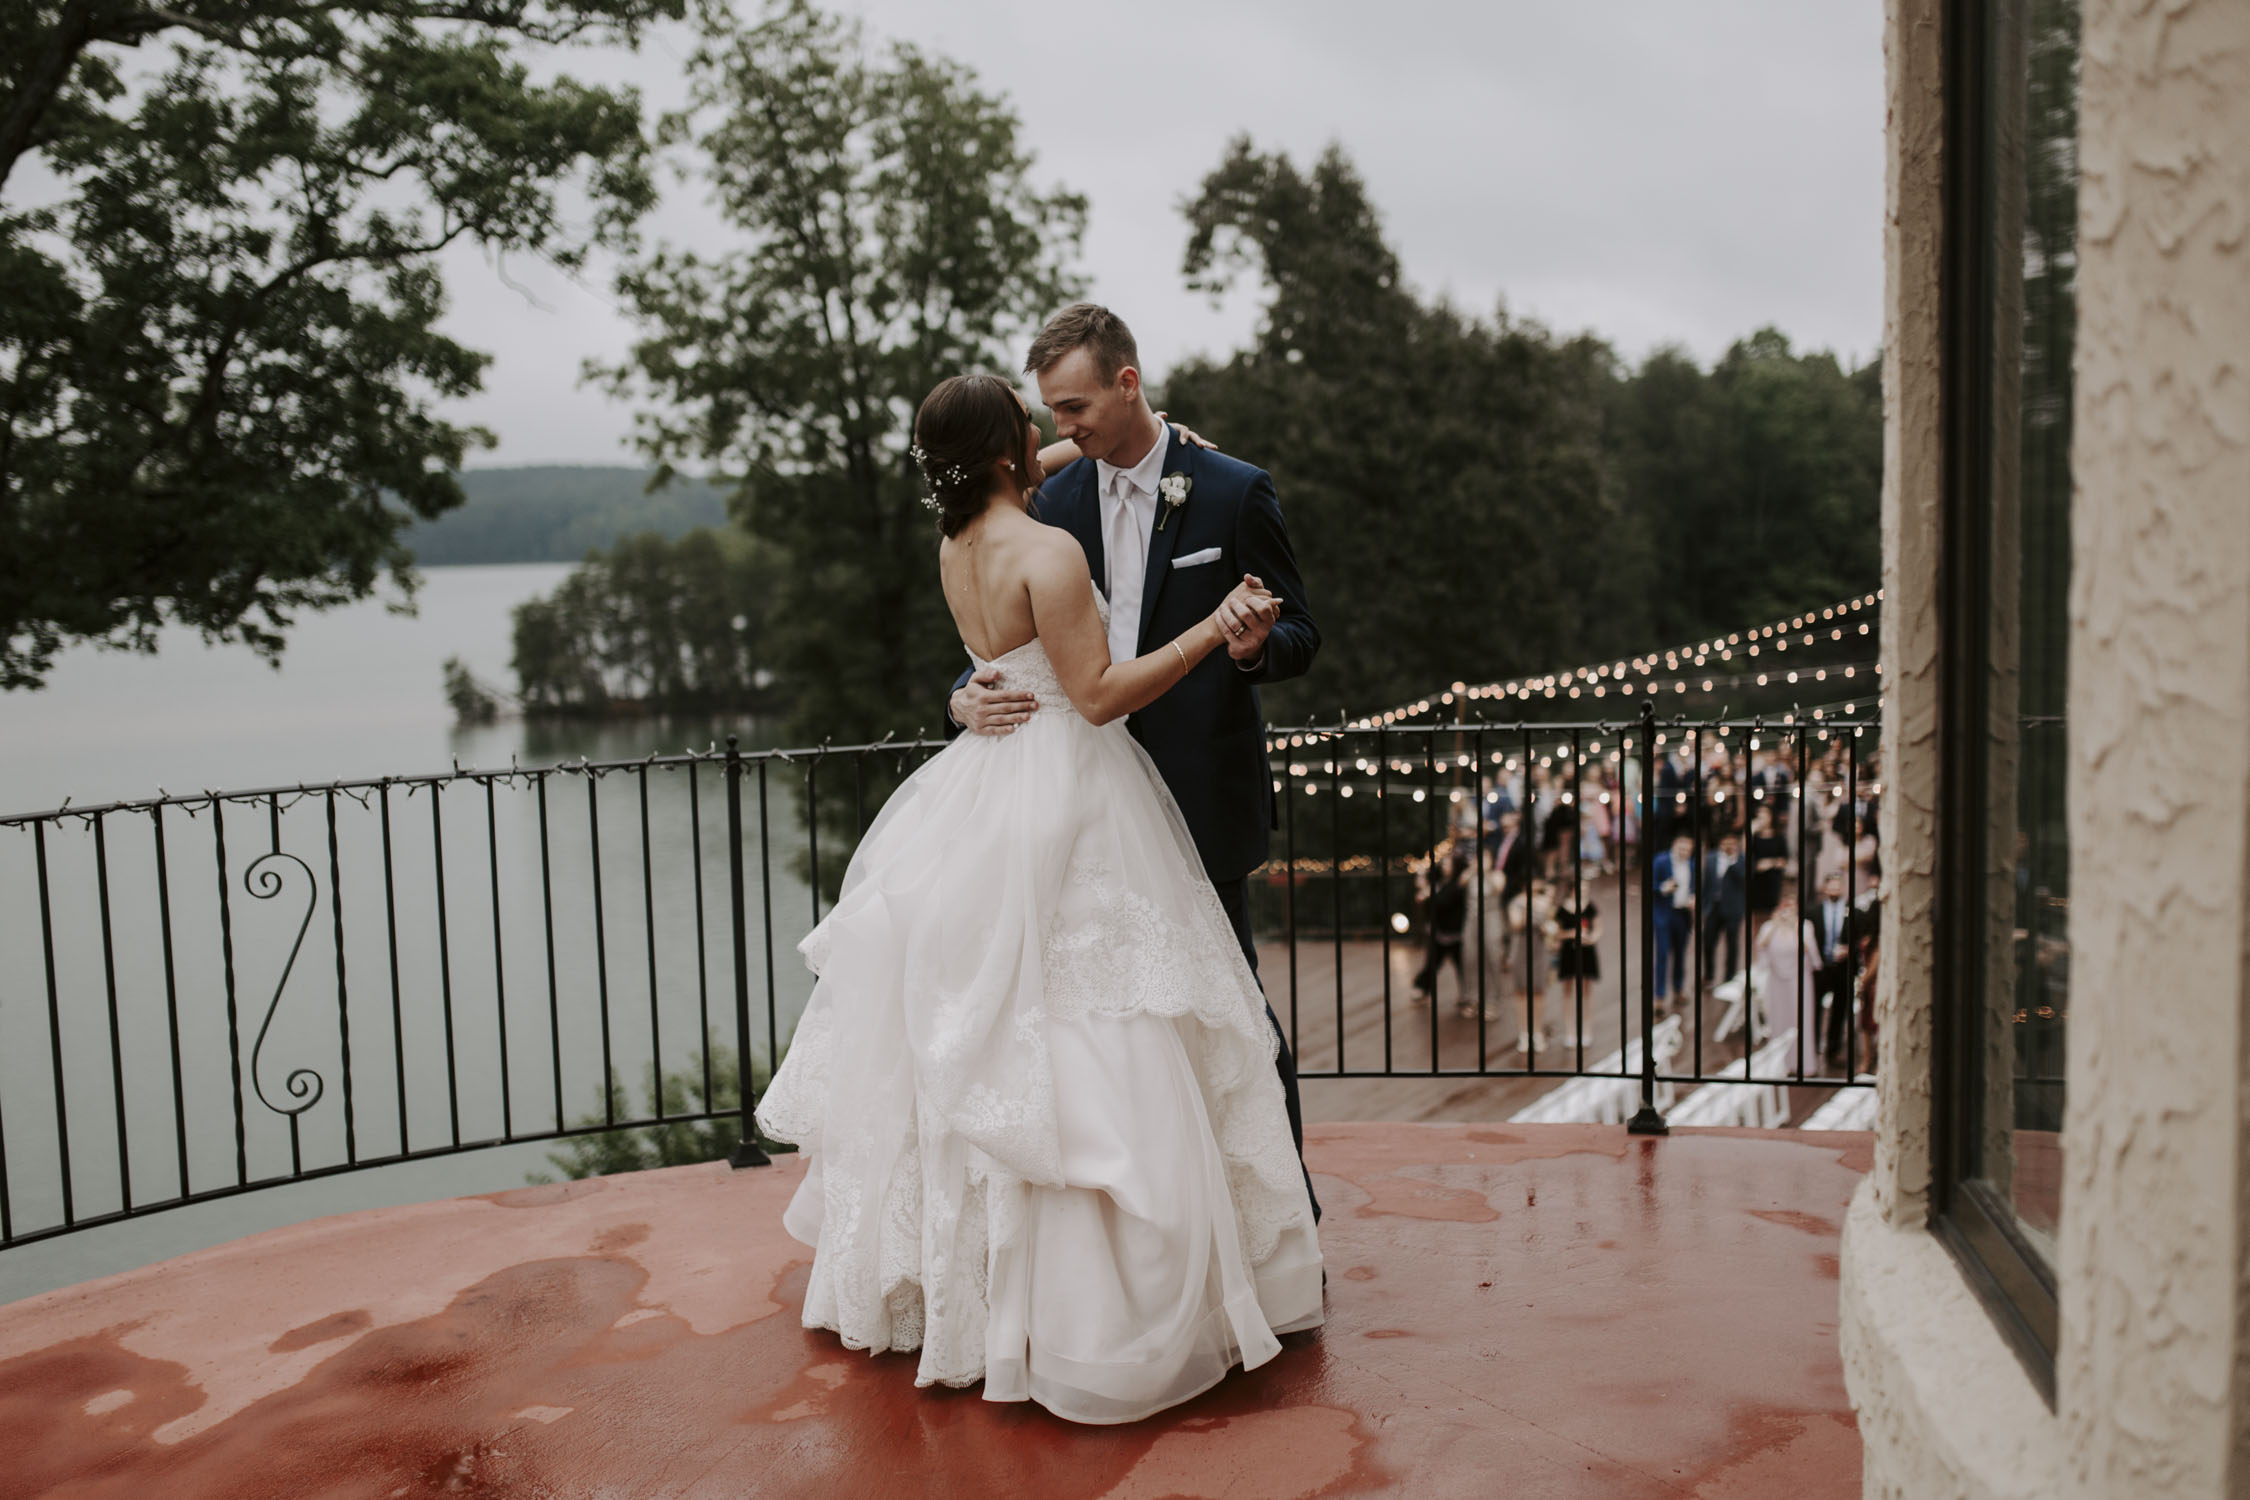 Rainy Bella Collina Wedding - First Dance at Reception | Kayli LaFon Photography, Greensboro Winston-Salem NC Wedding Photographer